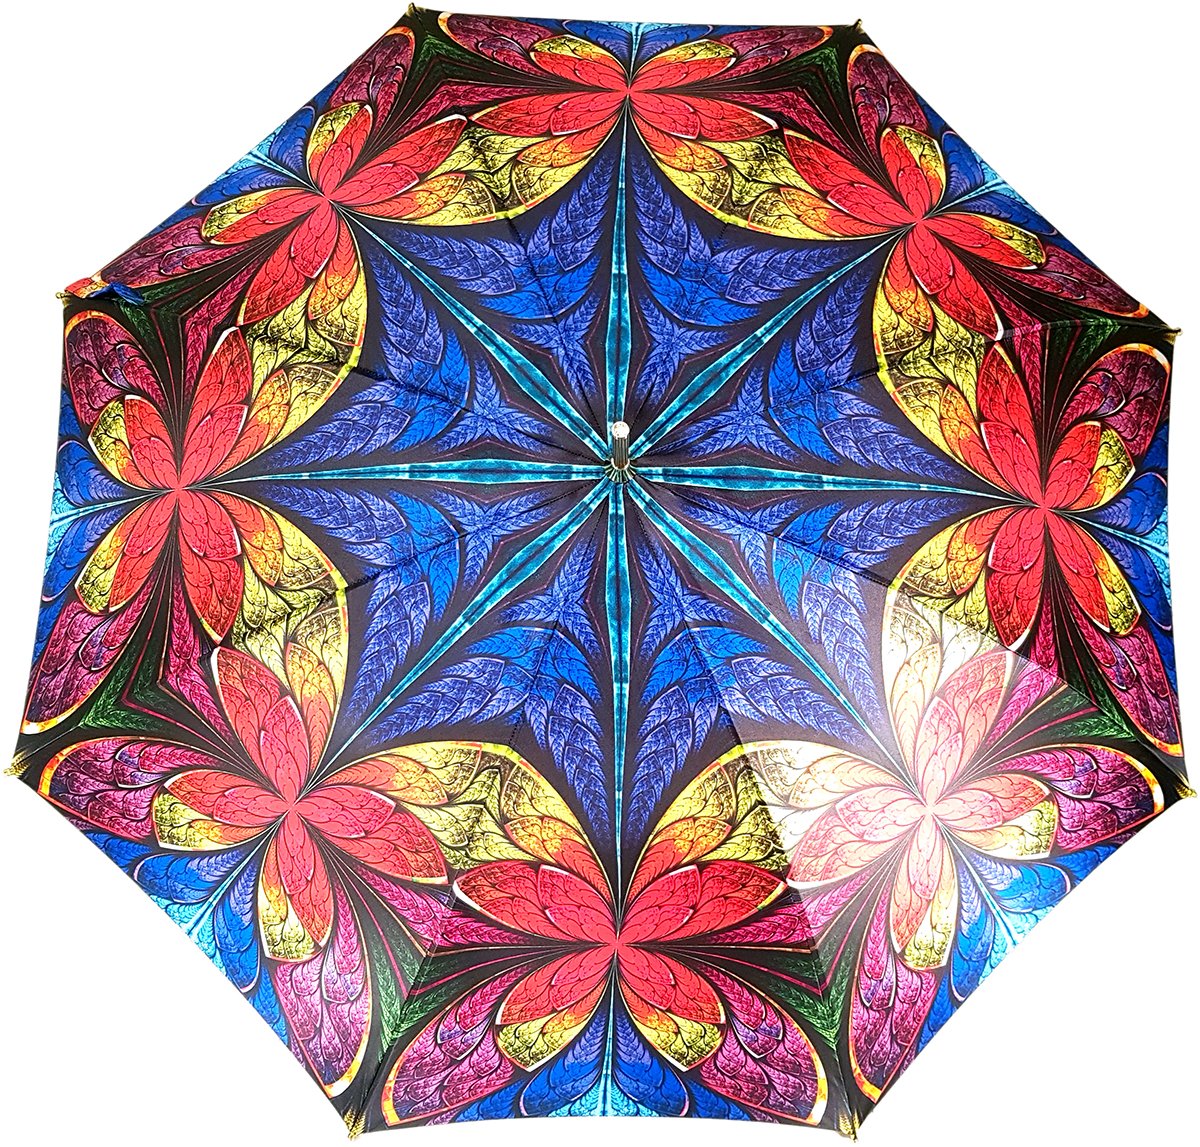 Wonderful Handmade Women's Umbrella - Exclusive Floral Design - il-marchesato